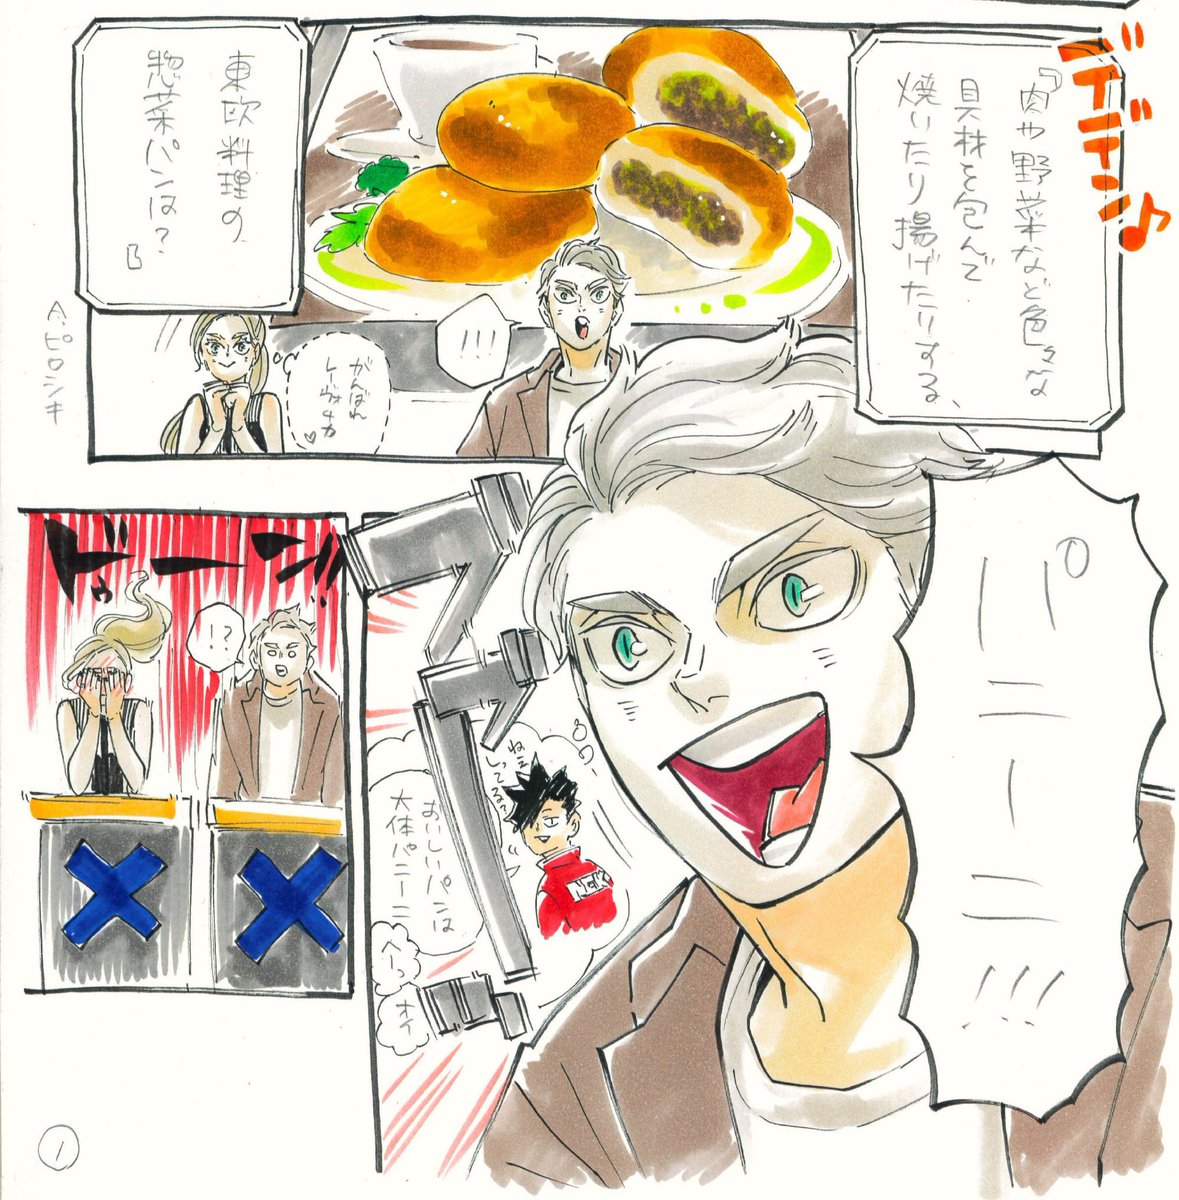 so Kuroo is poisoning everyone with his "panini" ??? 